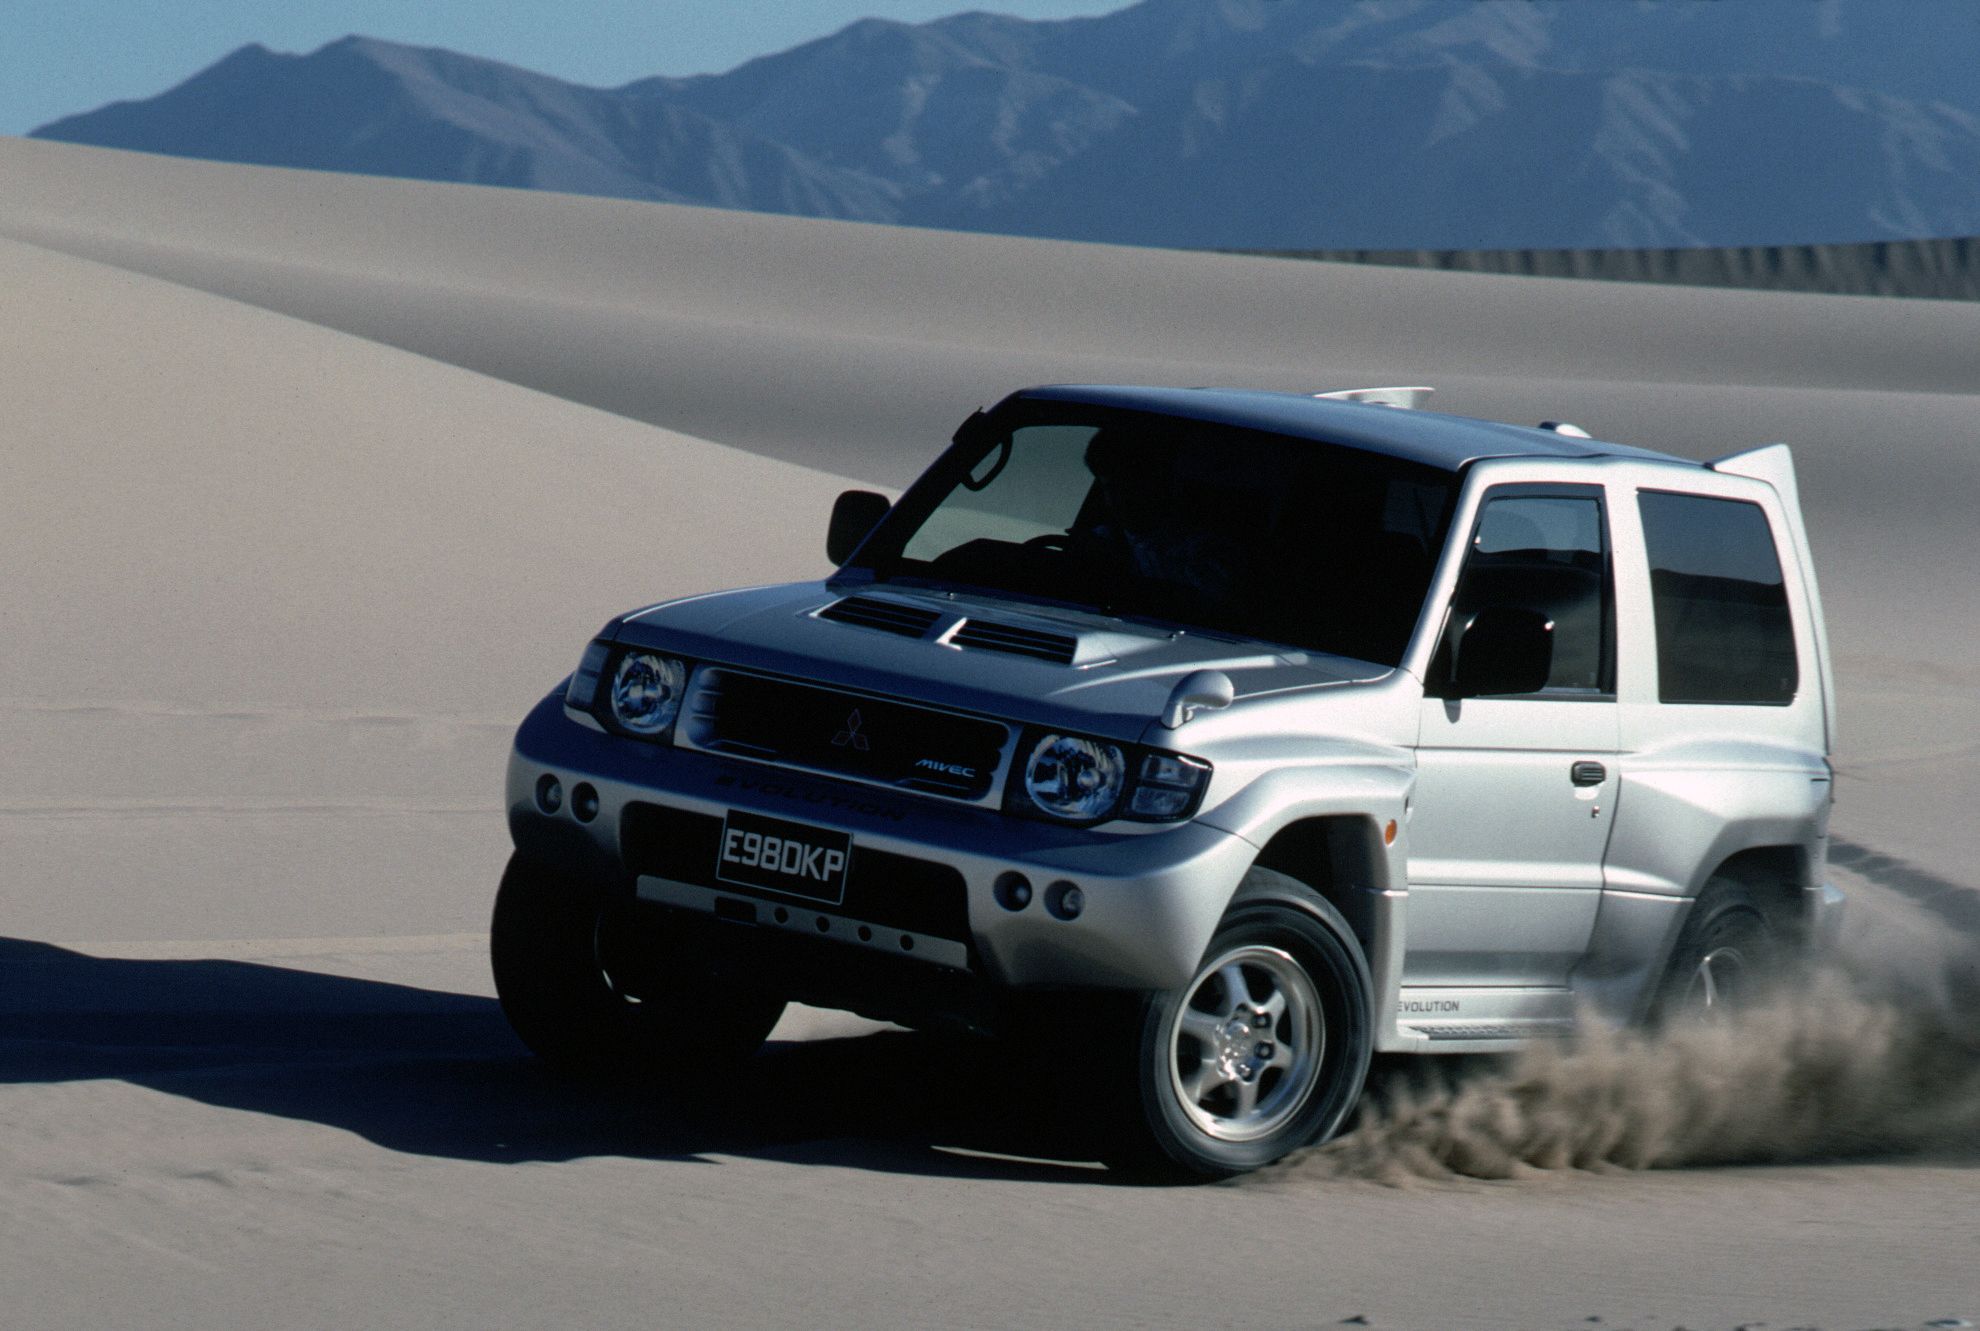 1997 Mitsubishi Pajero Evolution - An Unappreciated Dakar Raider